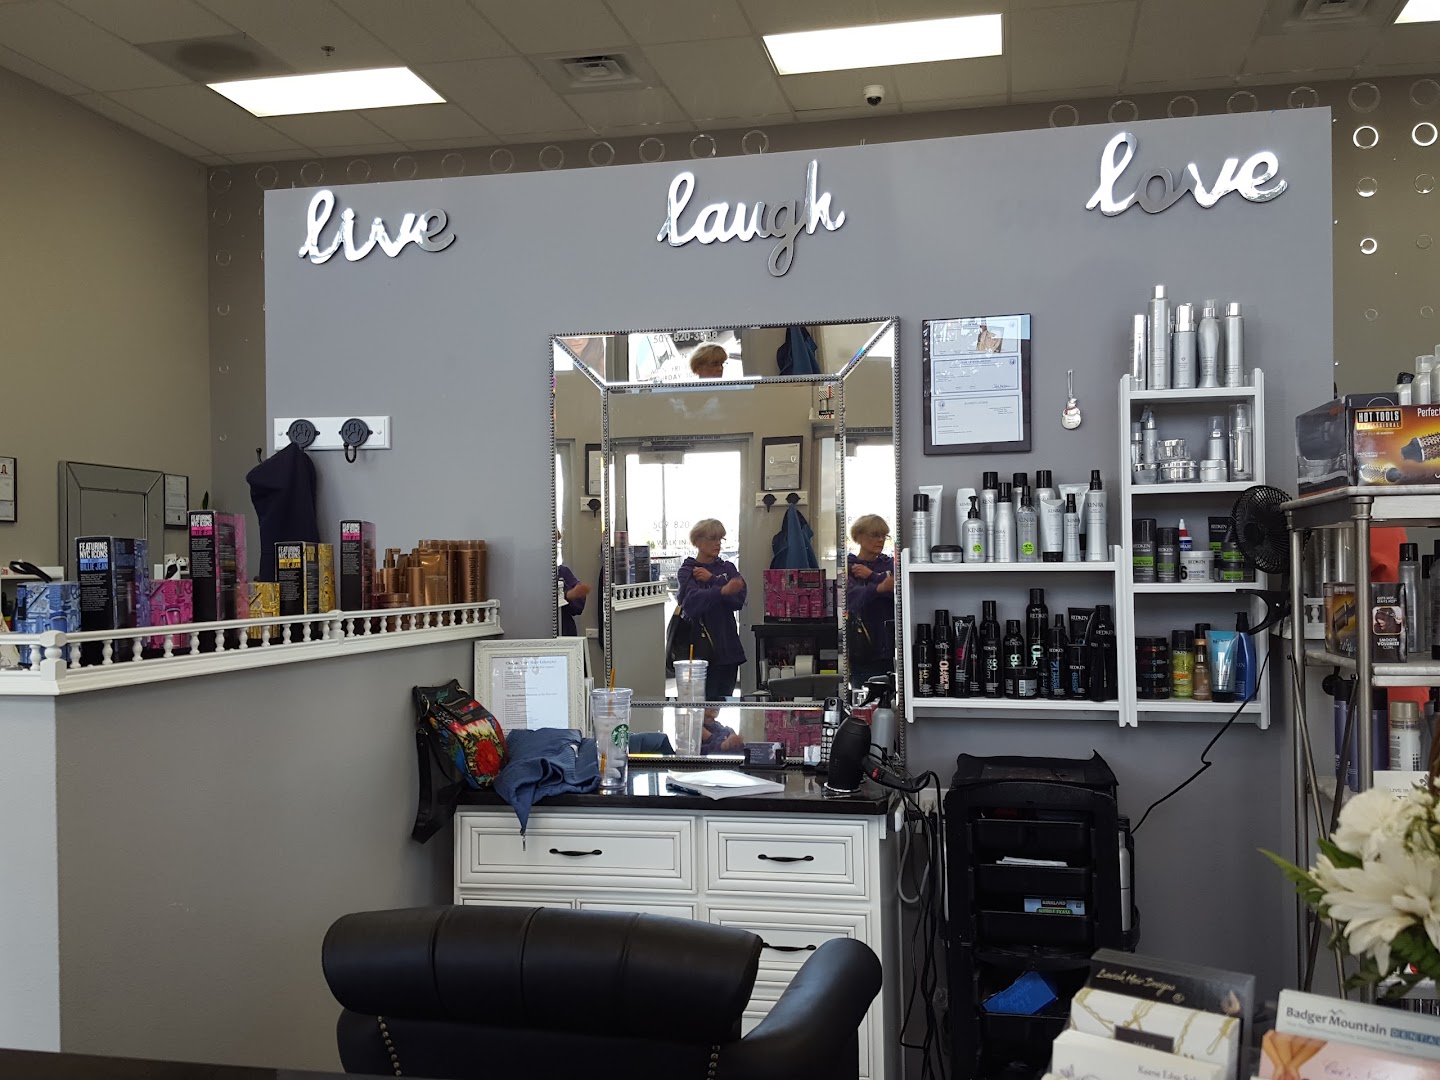 Keene Edge Salon and Barber